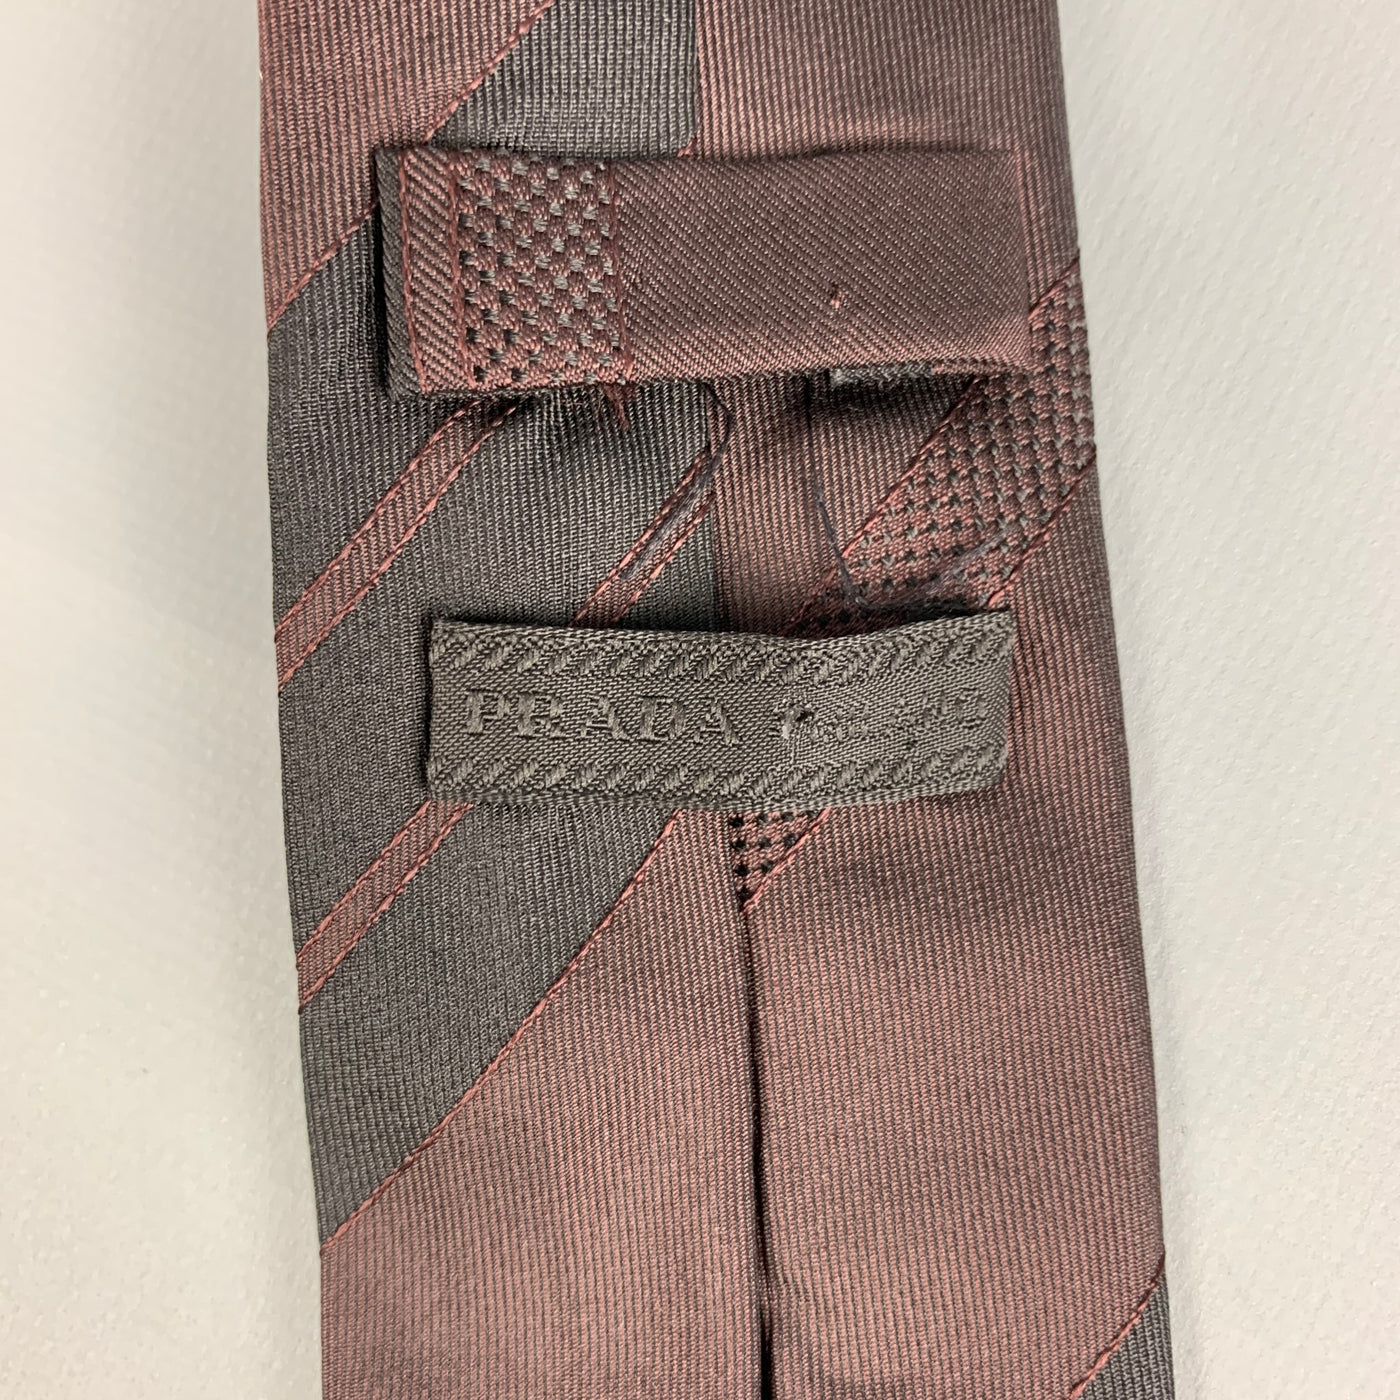 PRADA Brown Black Diagonal Stripe Silk Tie